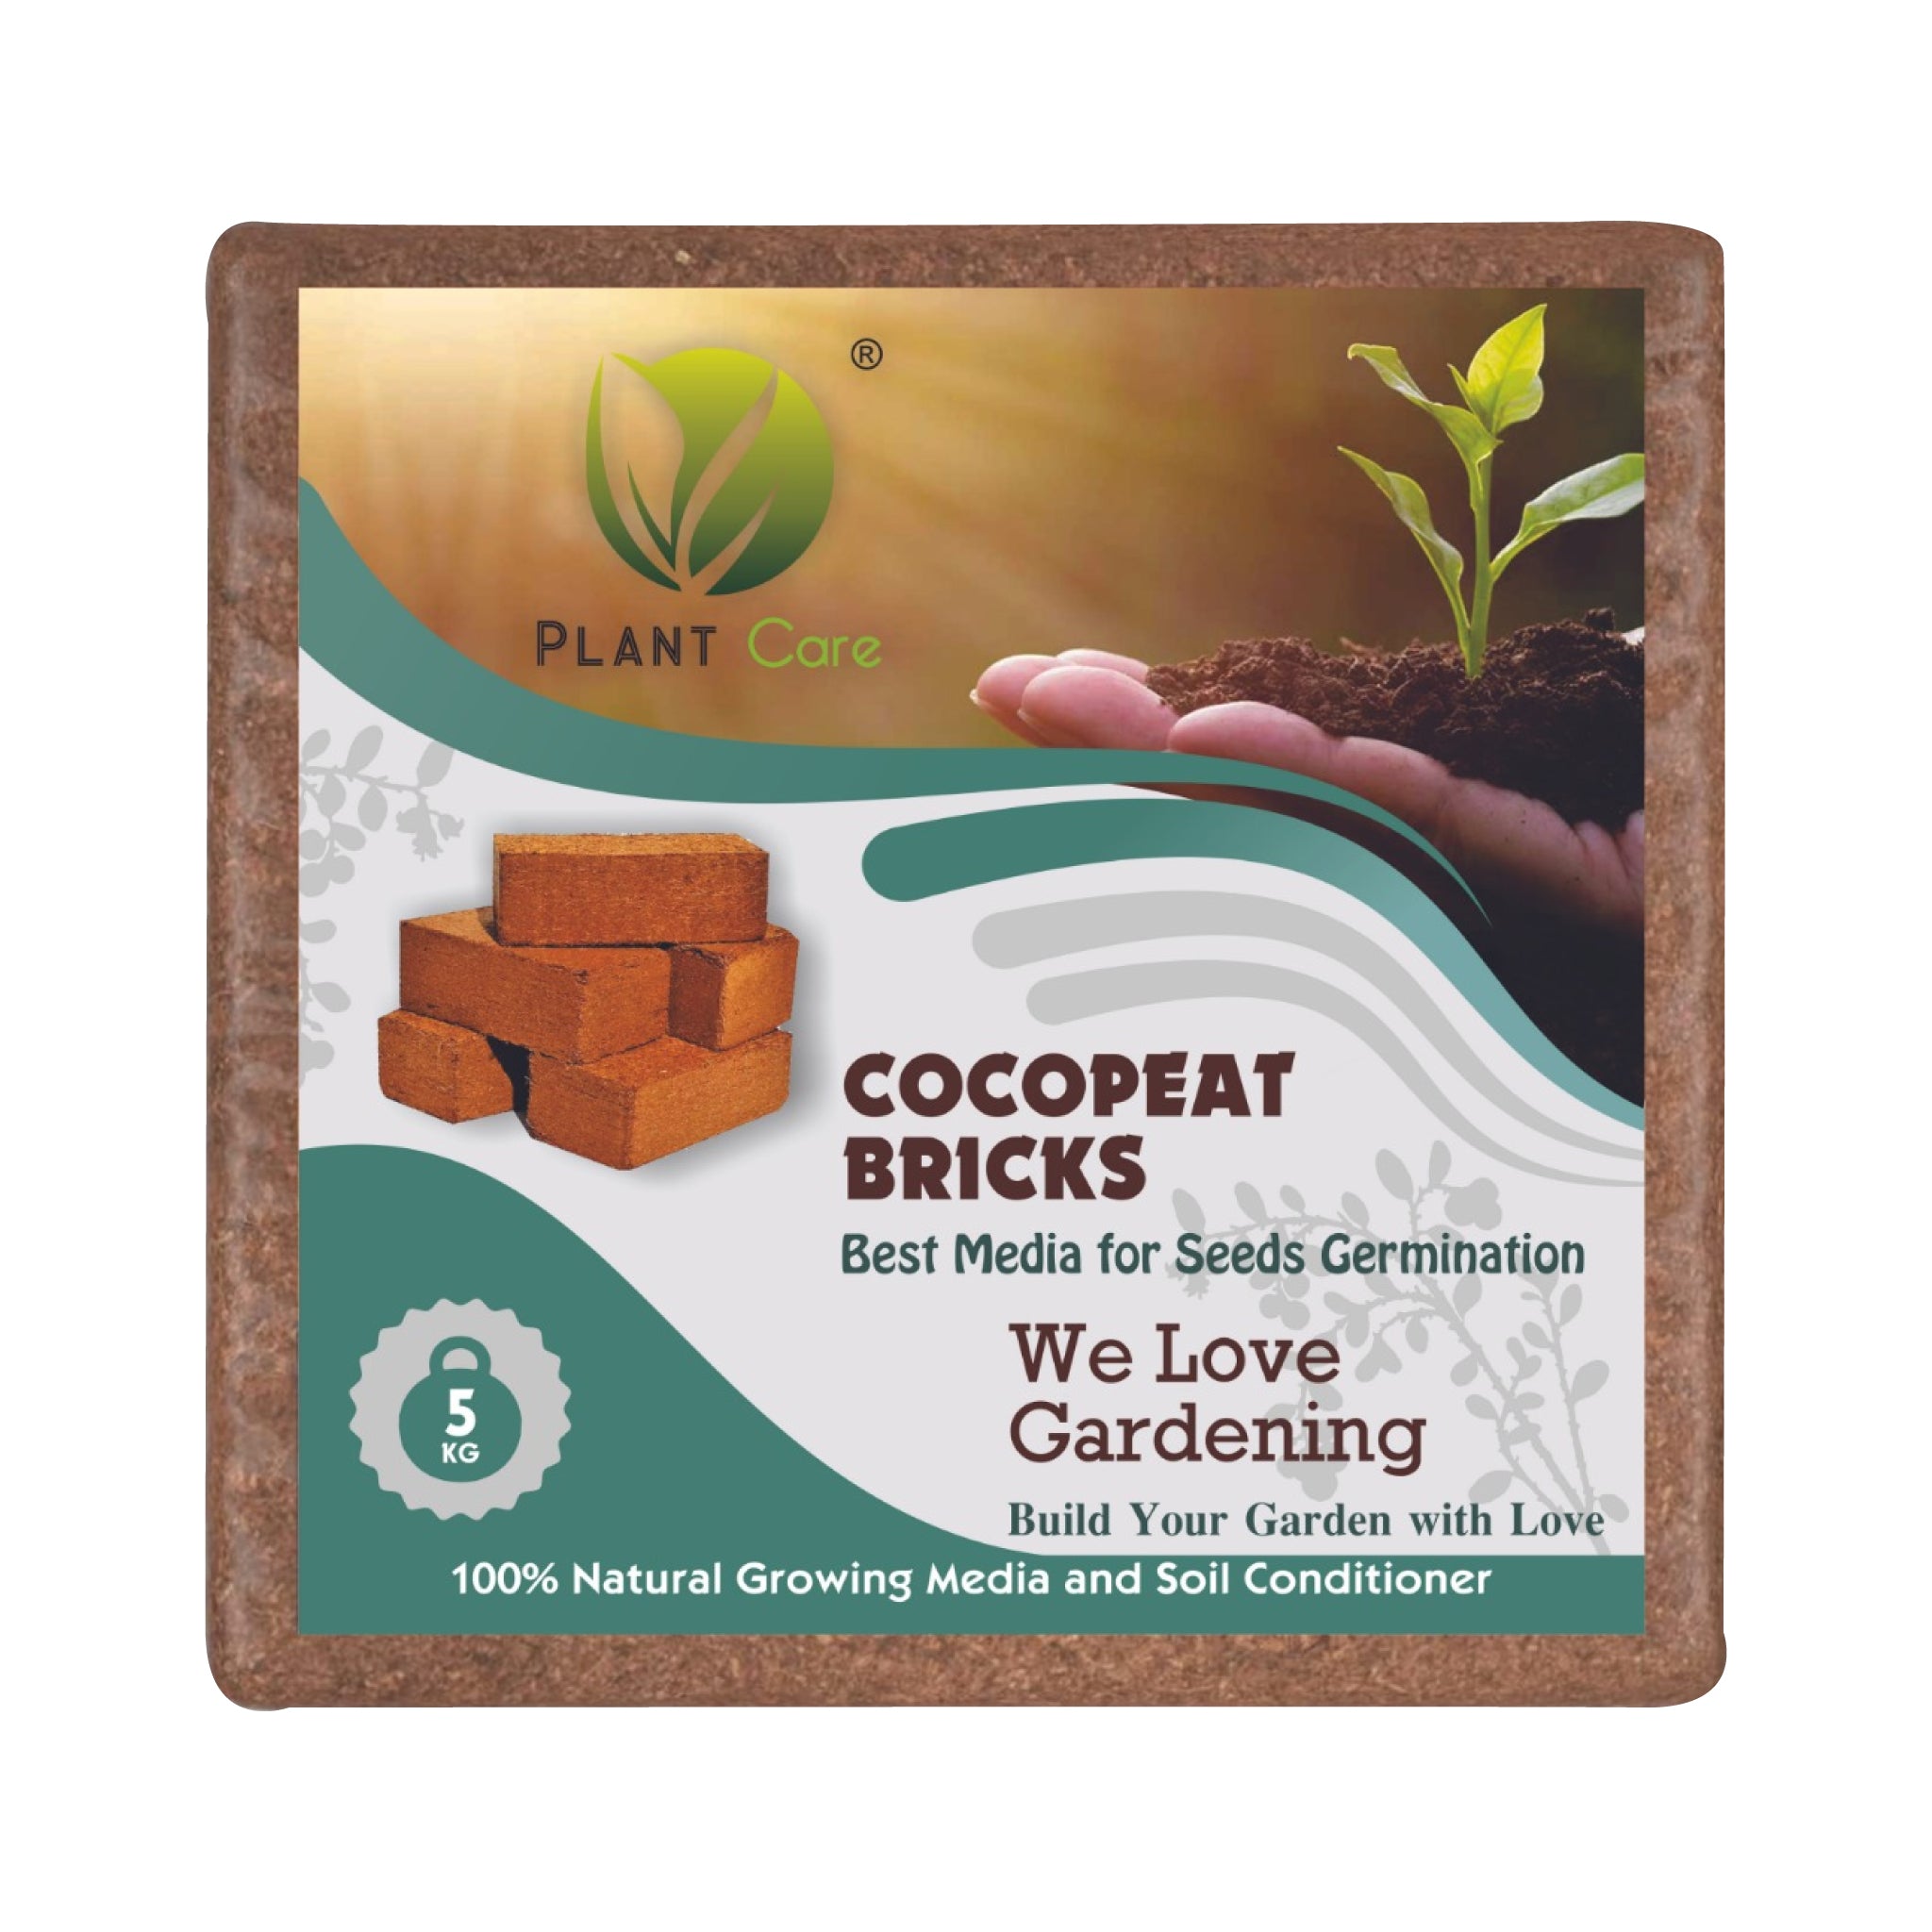 Cocopeat bricks